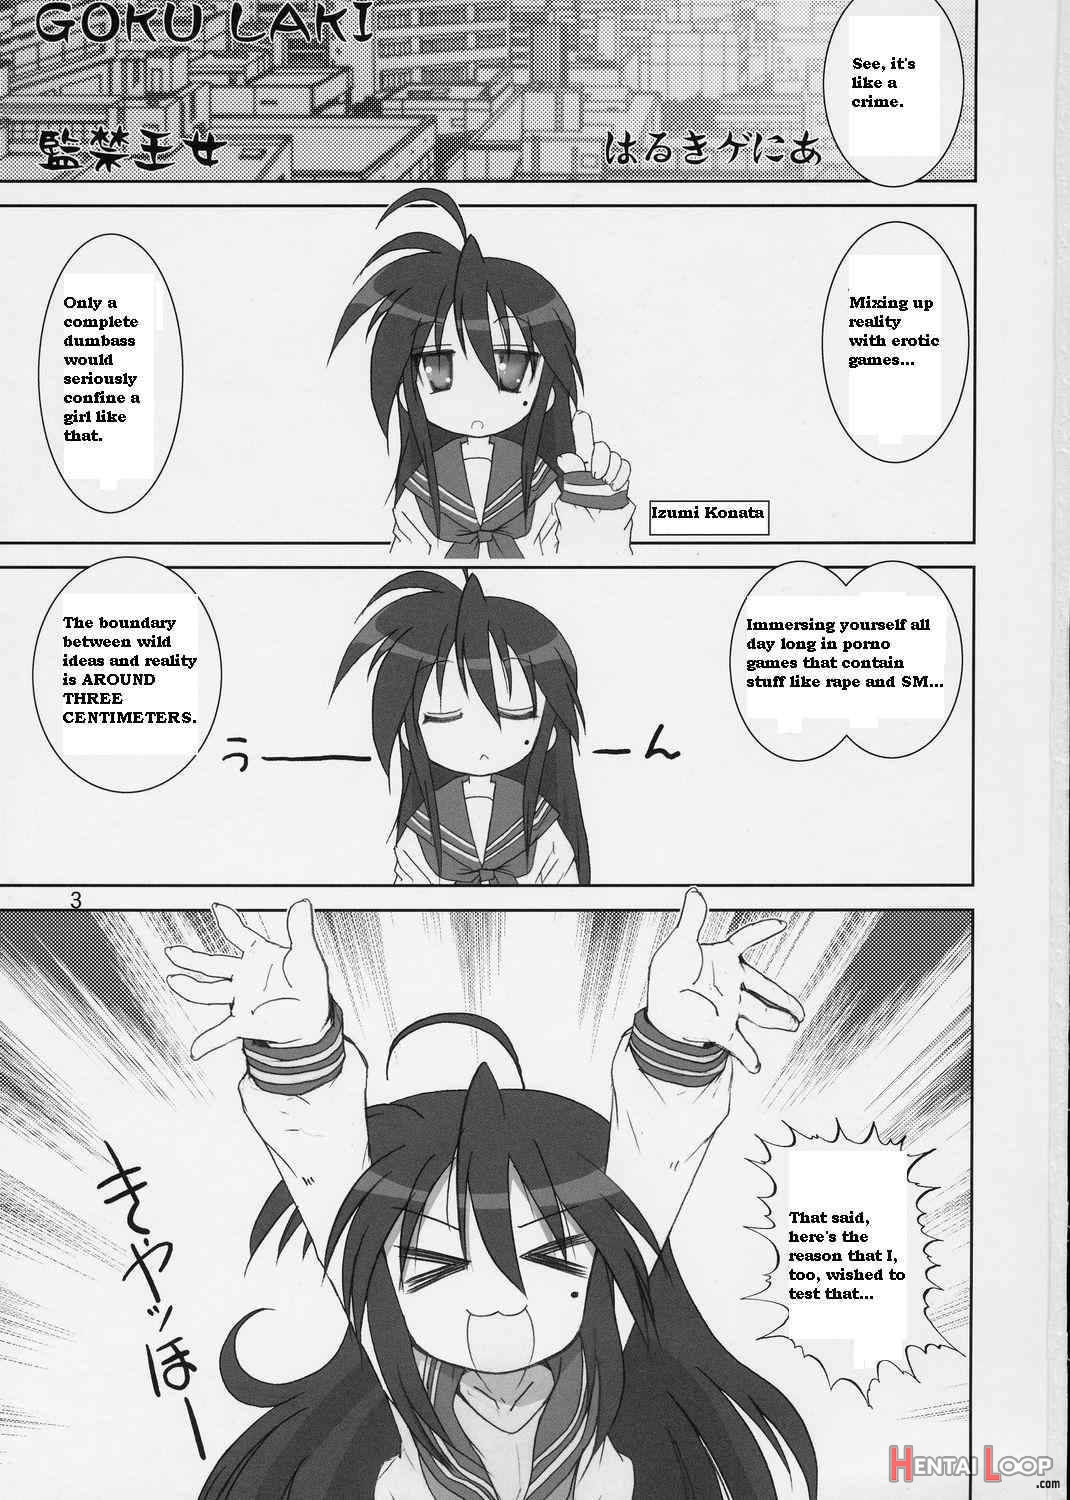 Goku☆laki 1 page 2